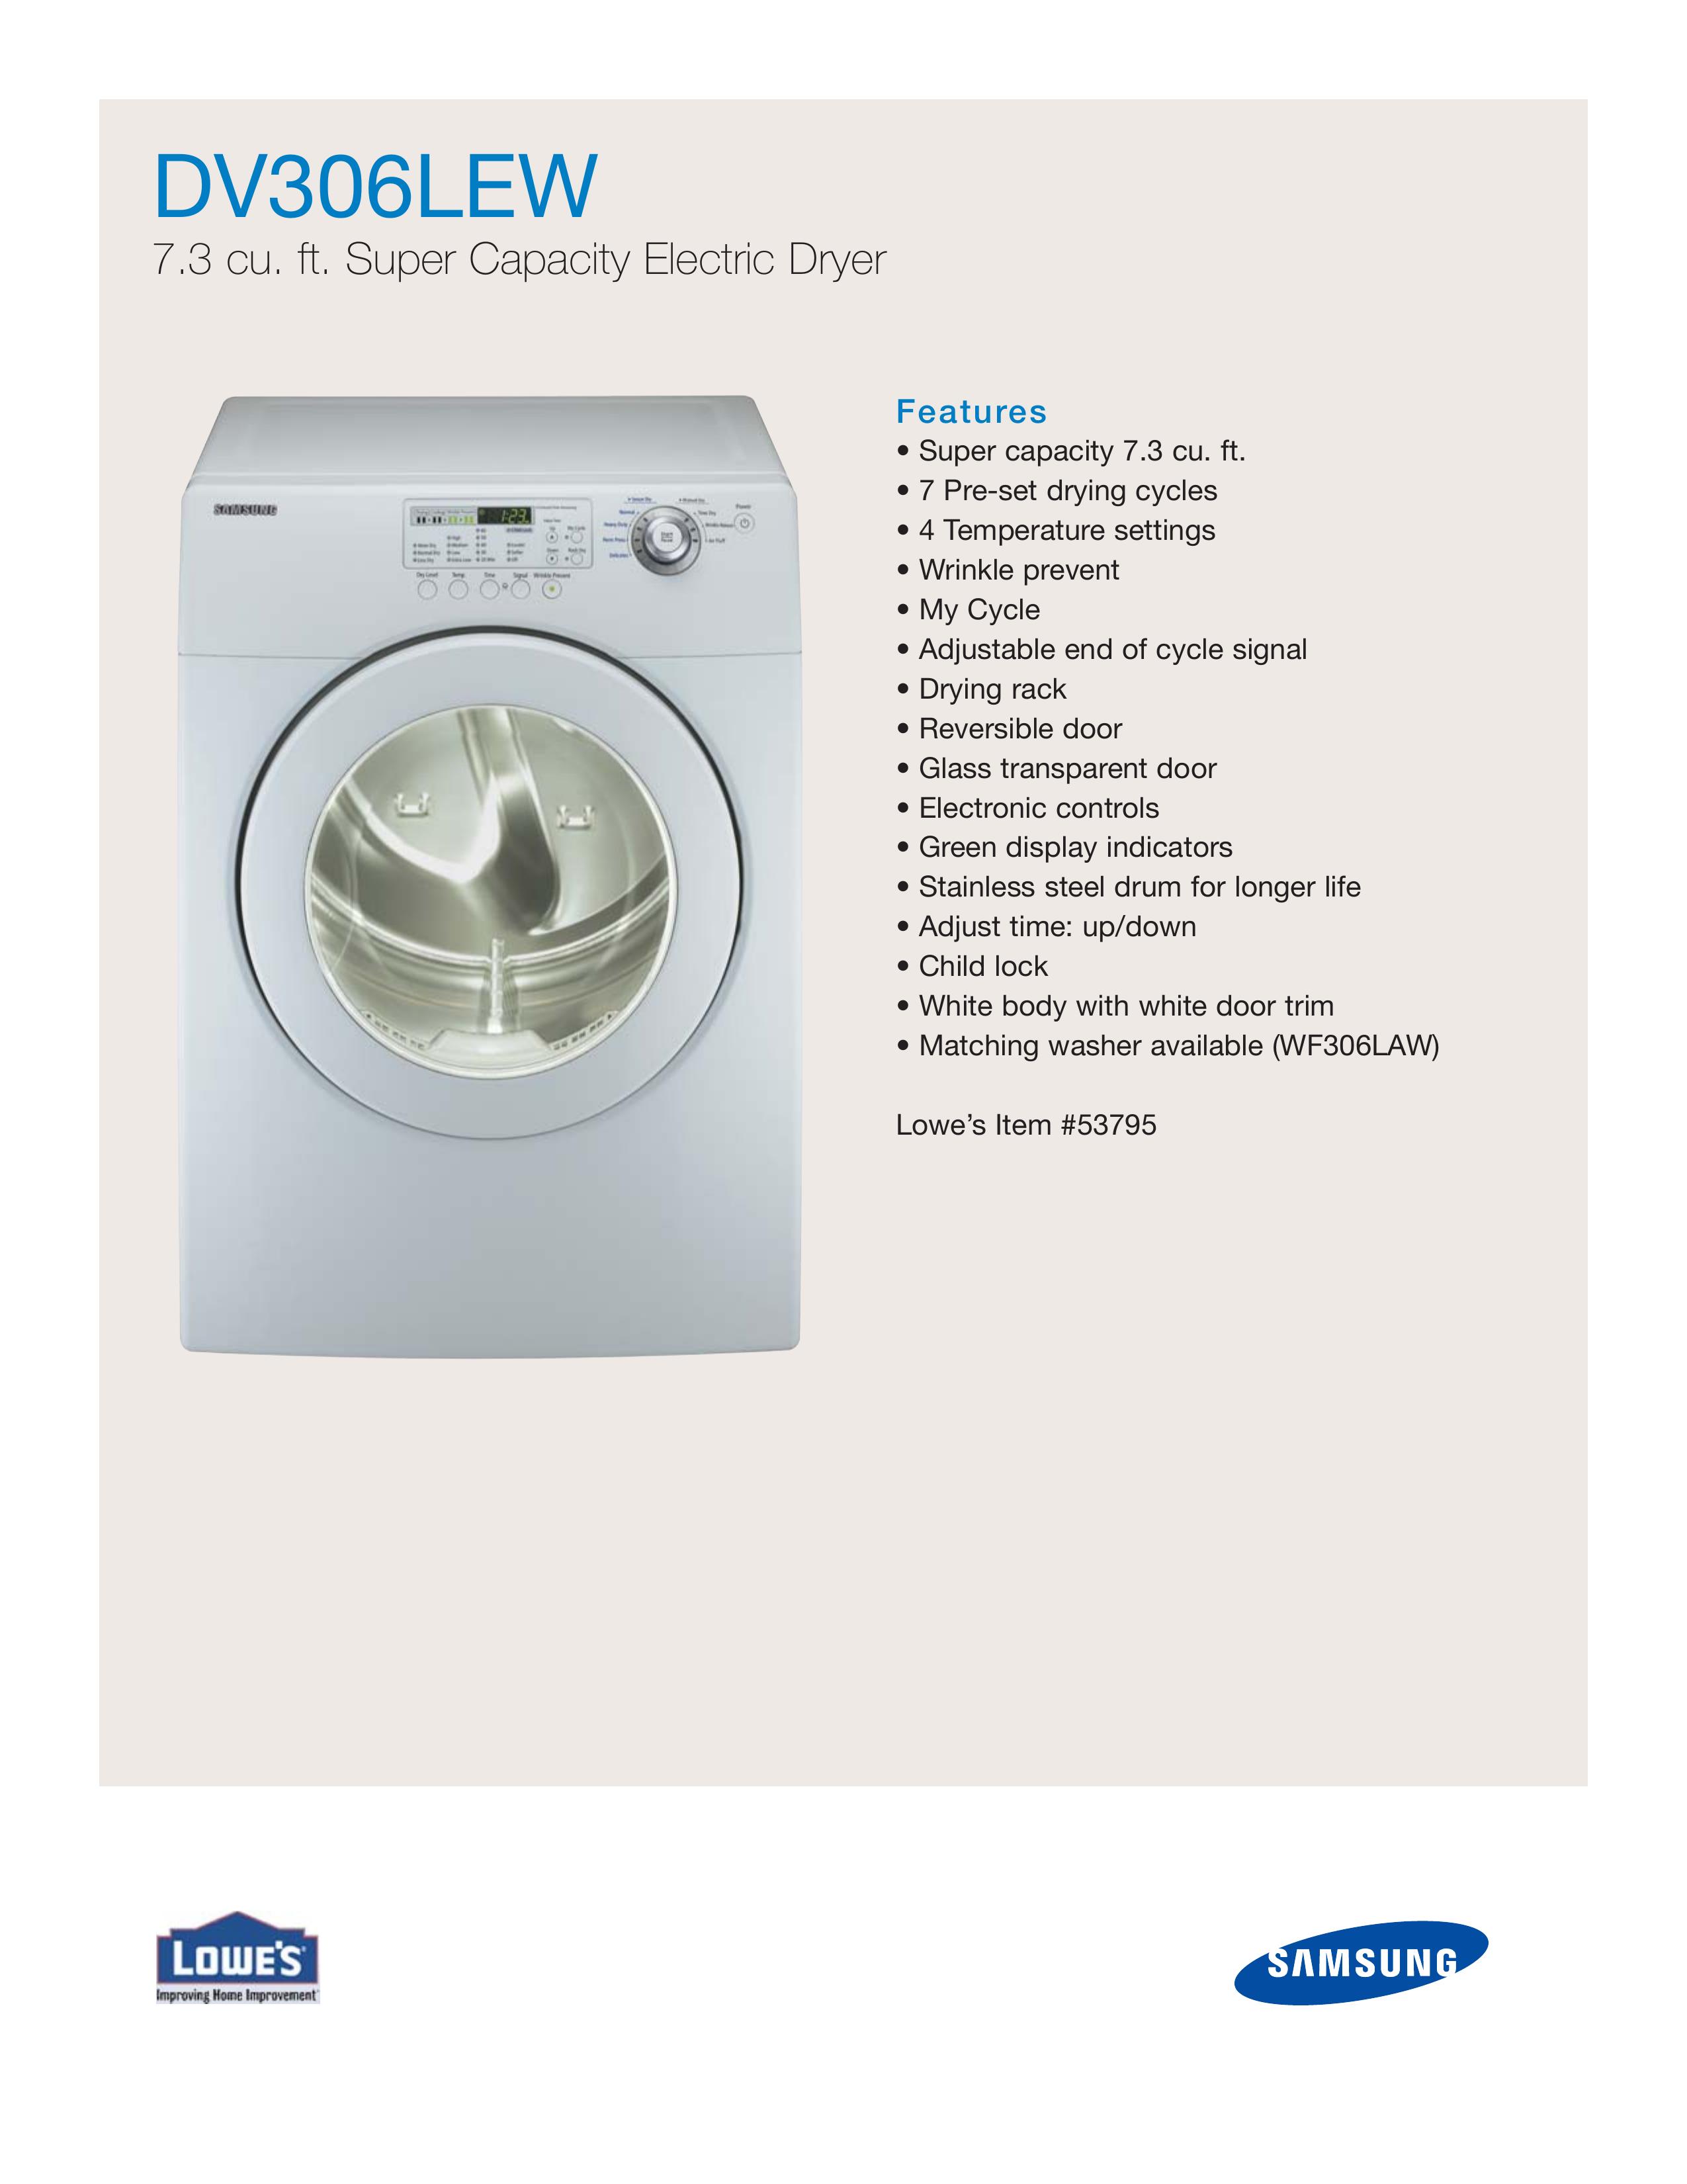 Samsung DV306LEW Clothes Dryer User Manual